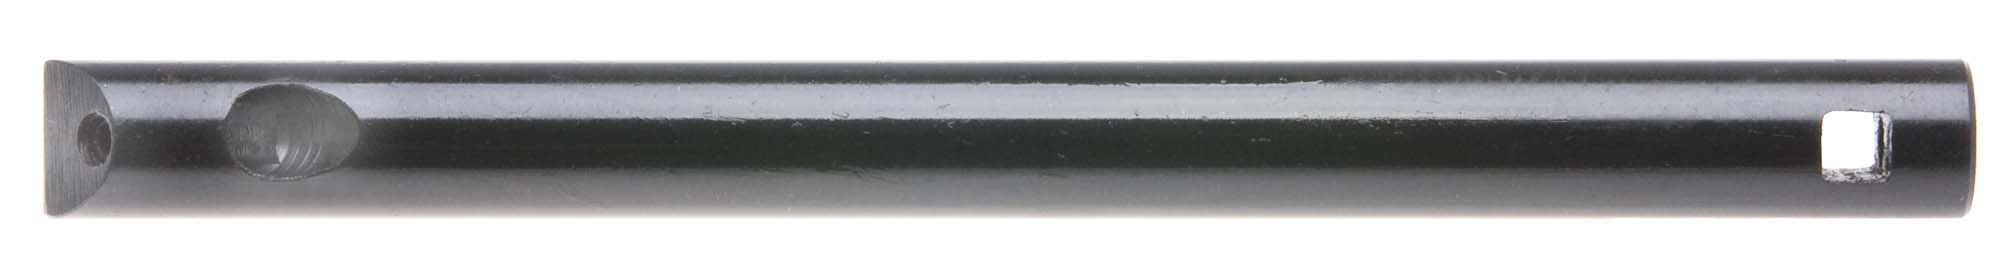 1/2" Double End Boring Bar- High Speed Steel Toolbit Type